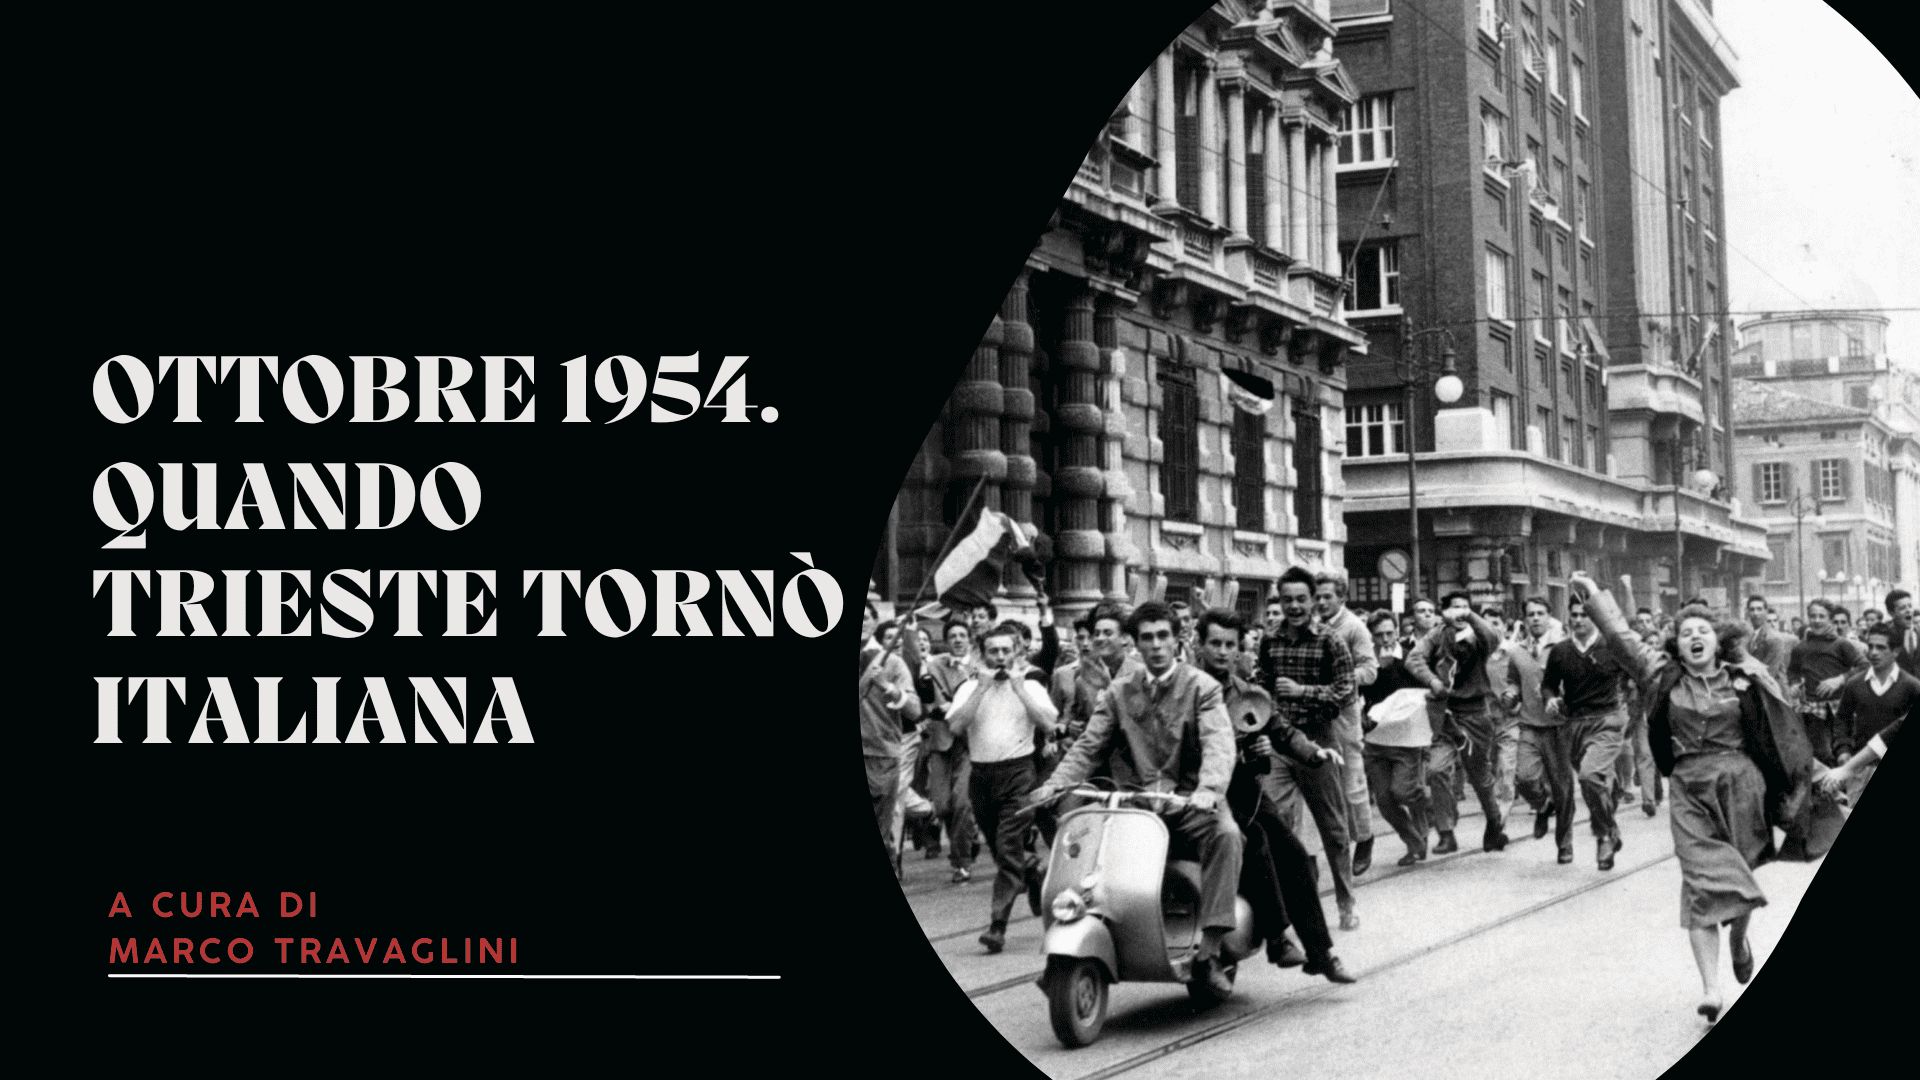 Ottobre 1954. Quando Trieste tornò italiana